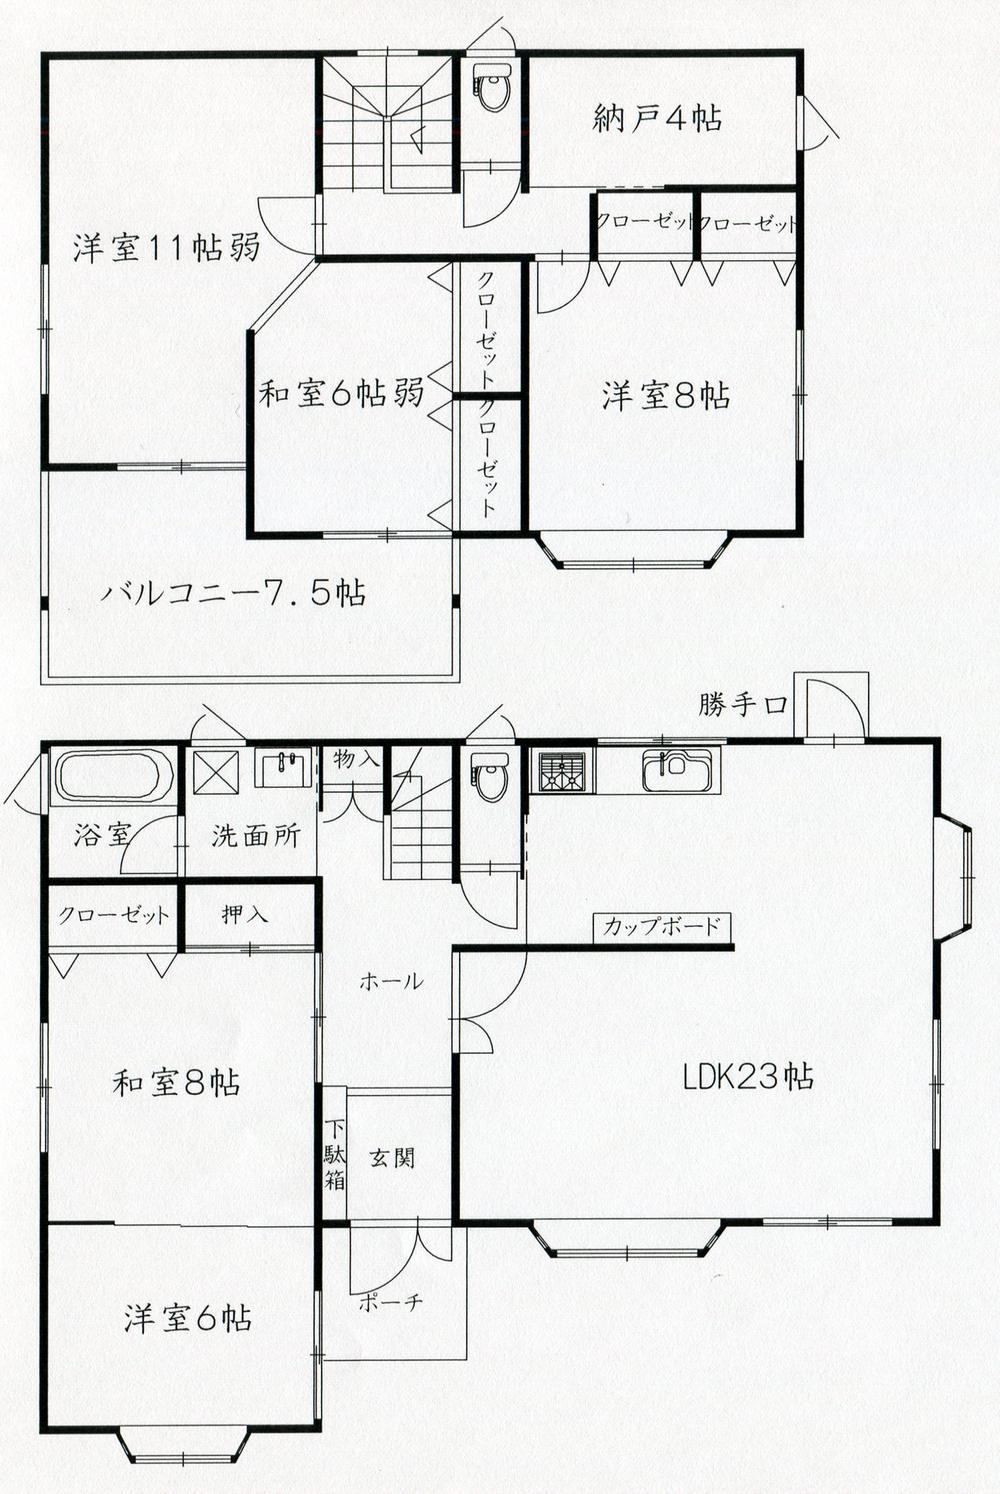 Floor plan. 25 million yen, 5LDK + S (storeroom), Land area 482.43 sq m , Abundance of building area 141.59 sq m storage is the point